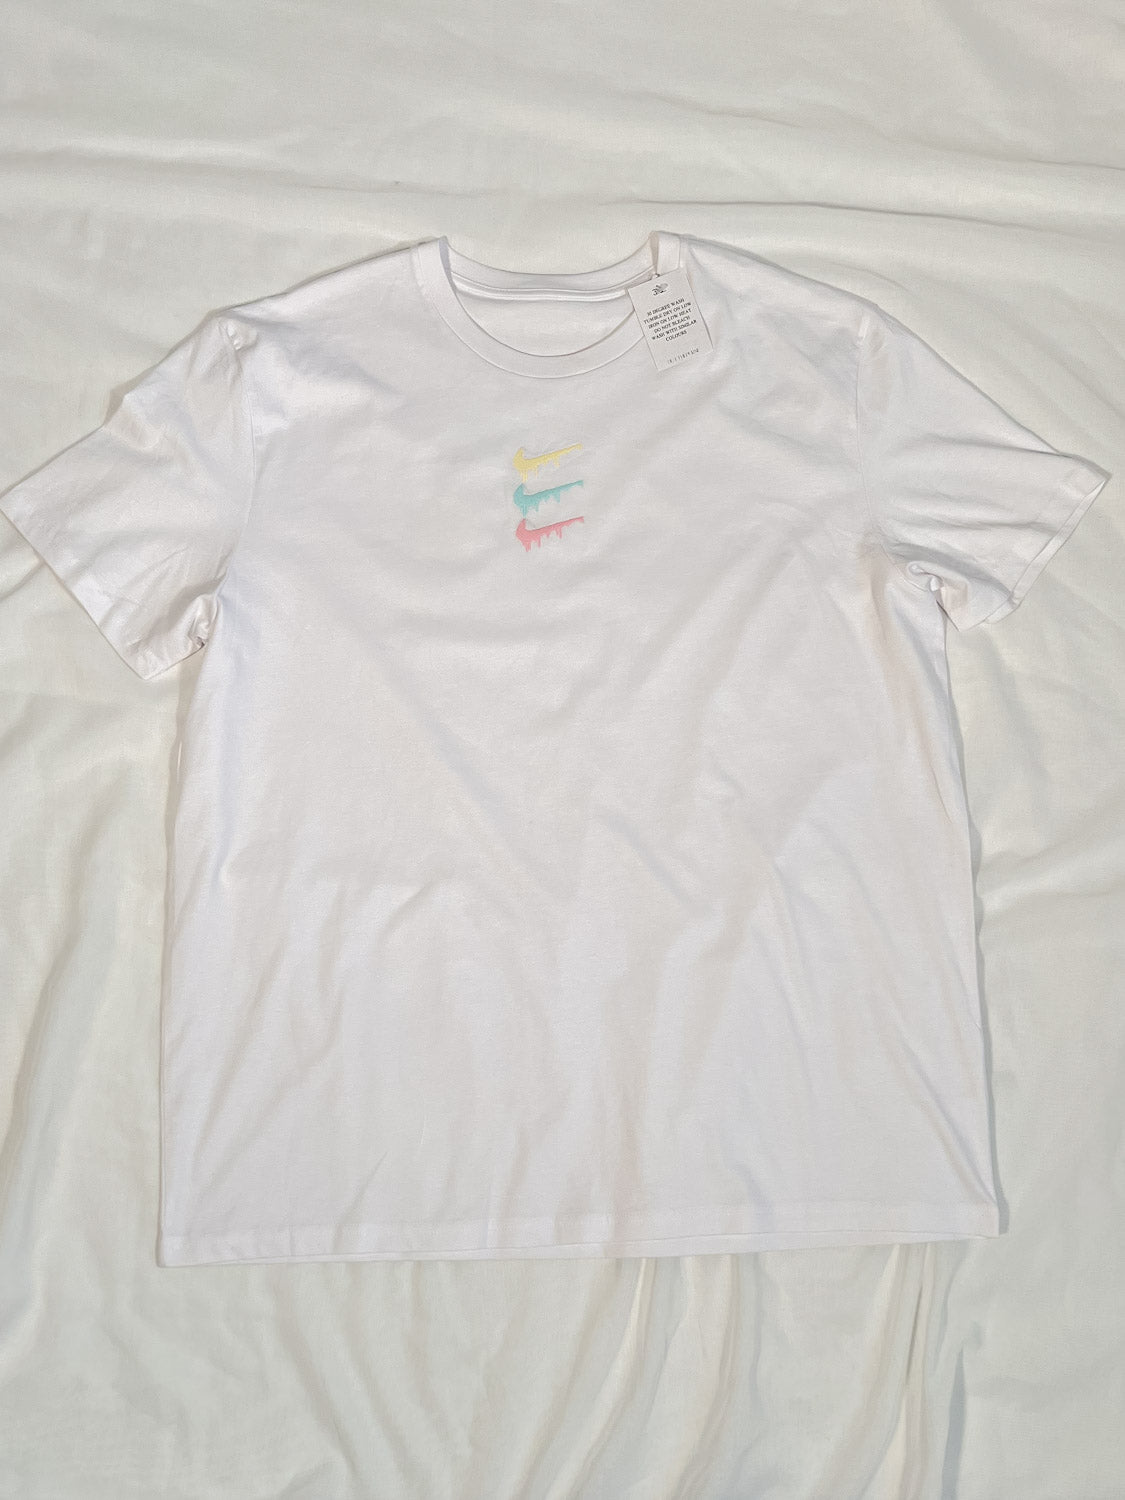 IMPERFECT / SALE- Paint Spill Pastel T-Shirt 3XL Out The Purse